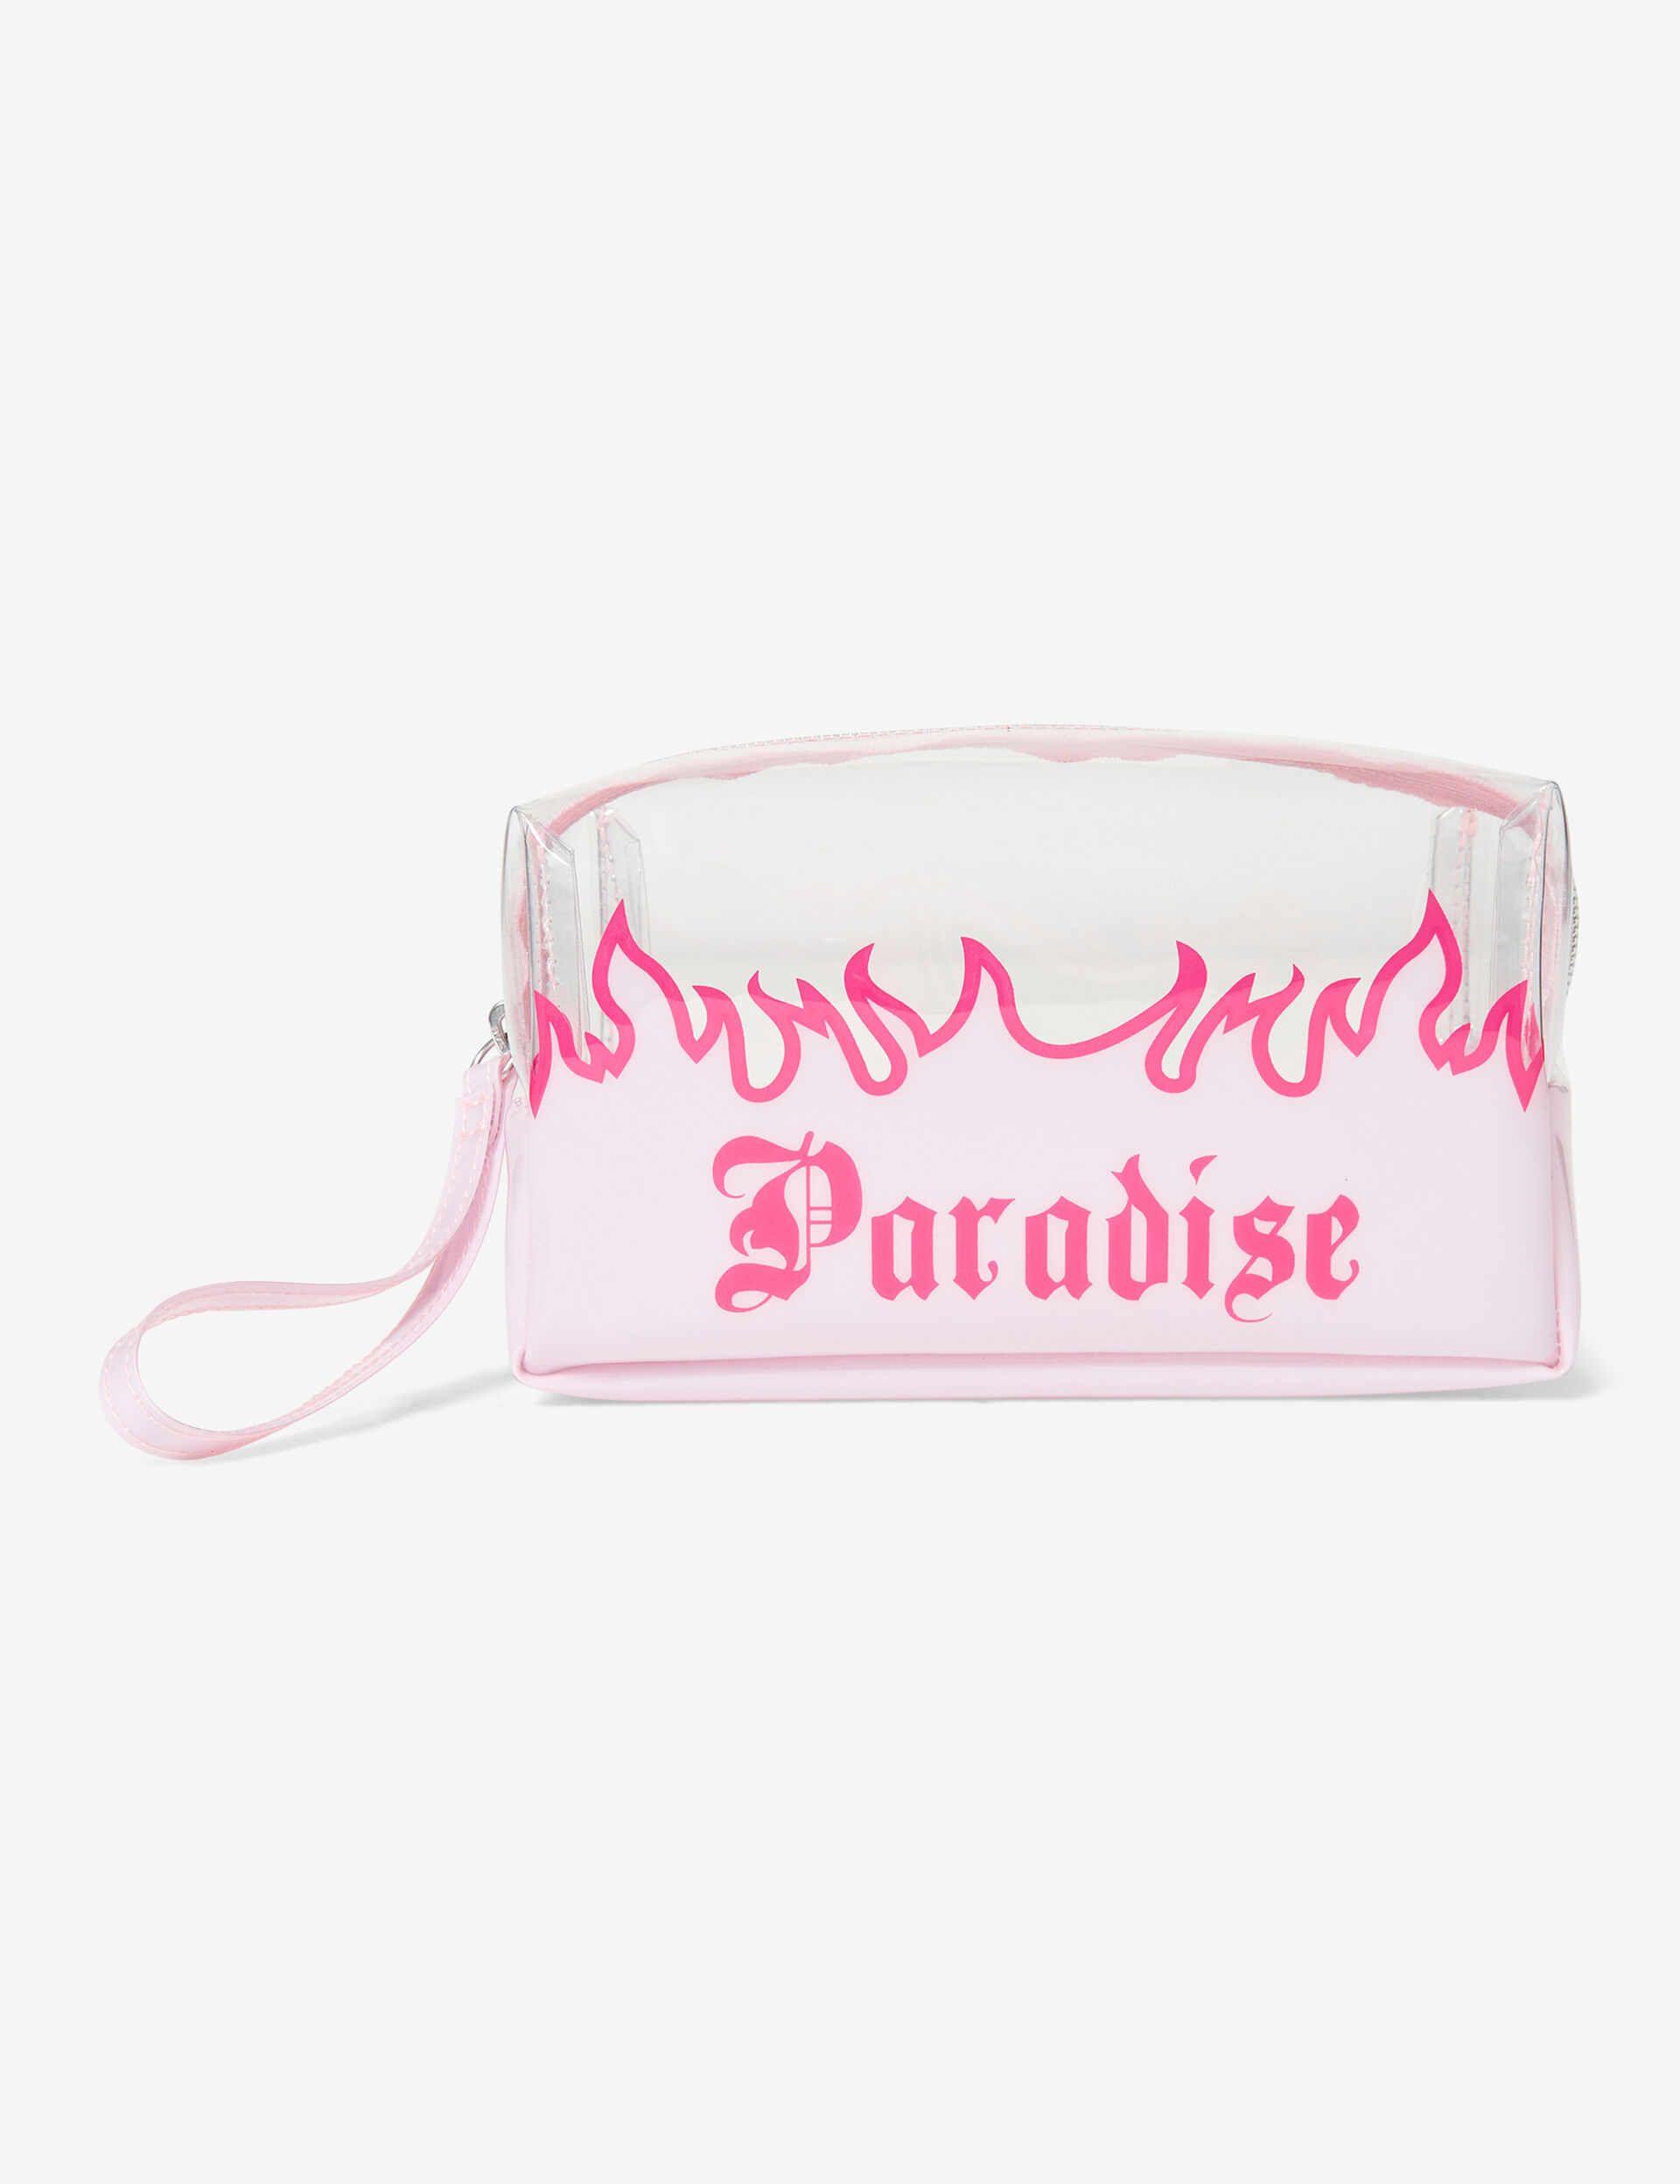 Trousse paradise